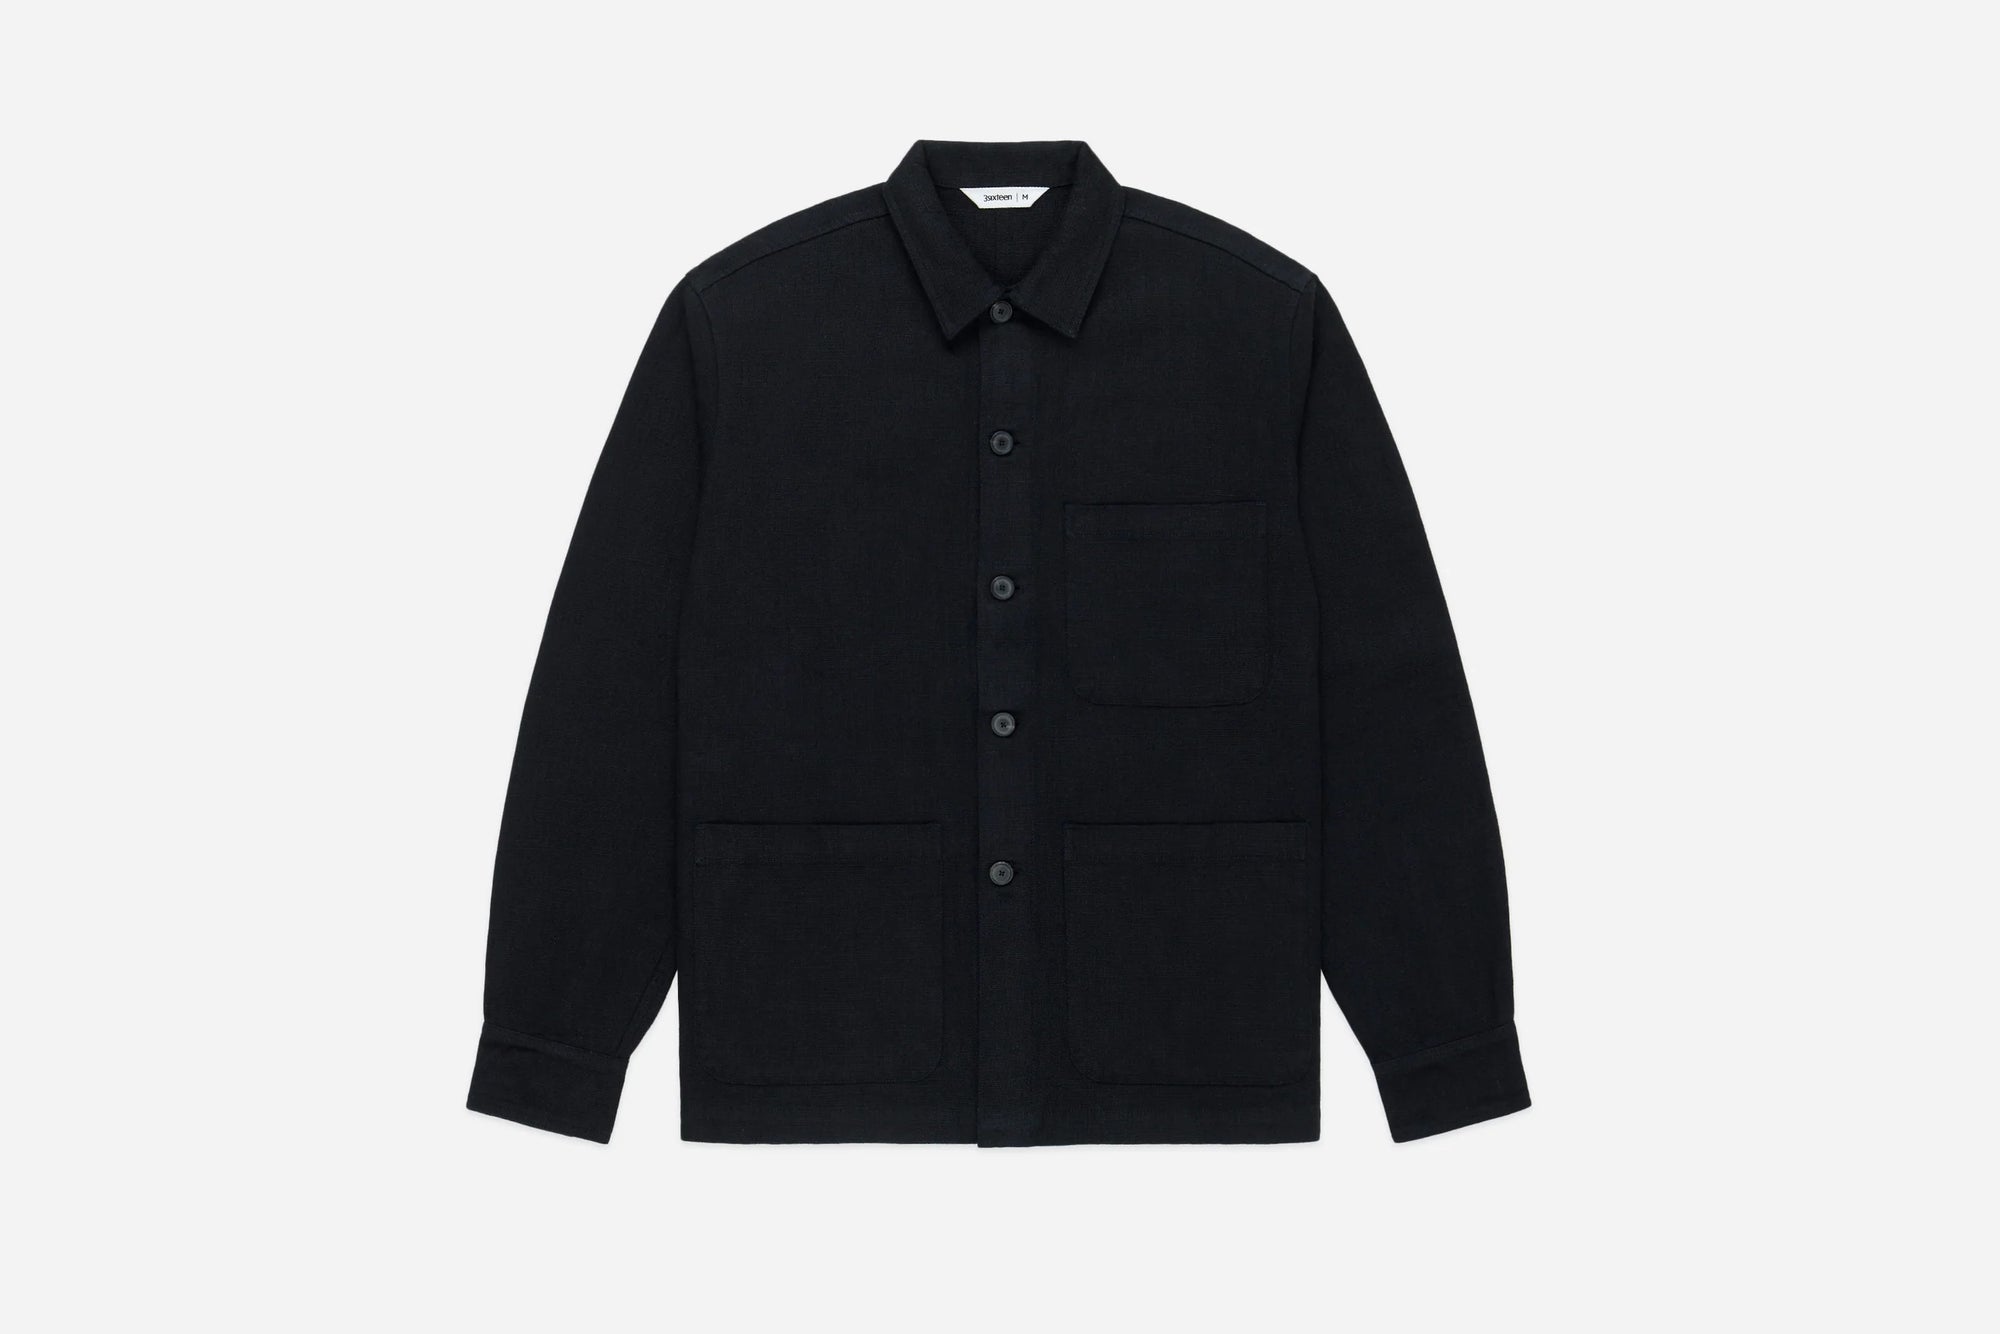 3Sixteen Shop Jacket in Black Cotton & Linen